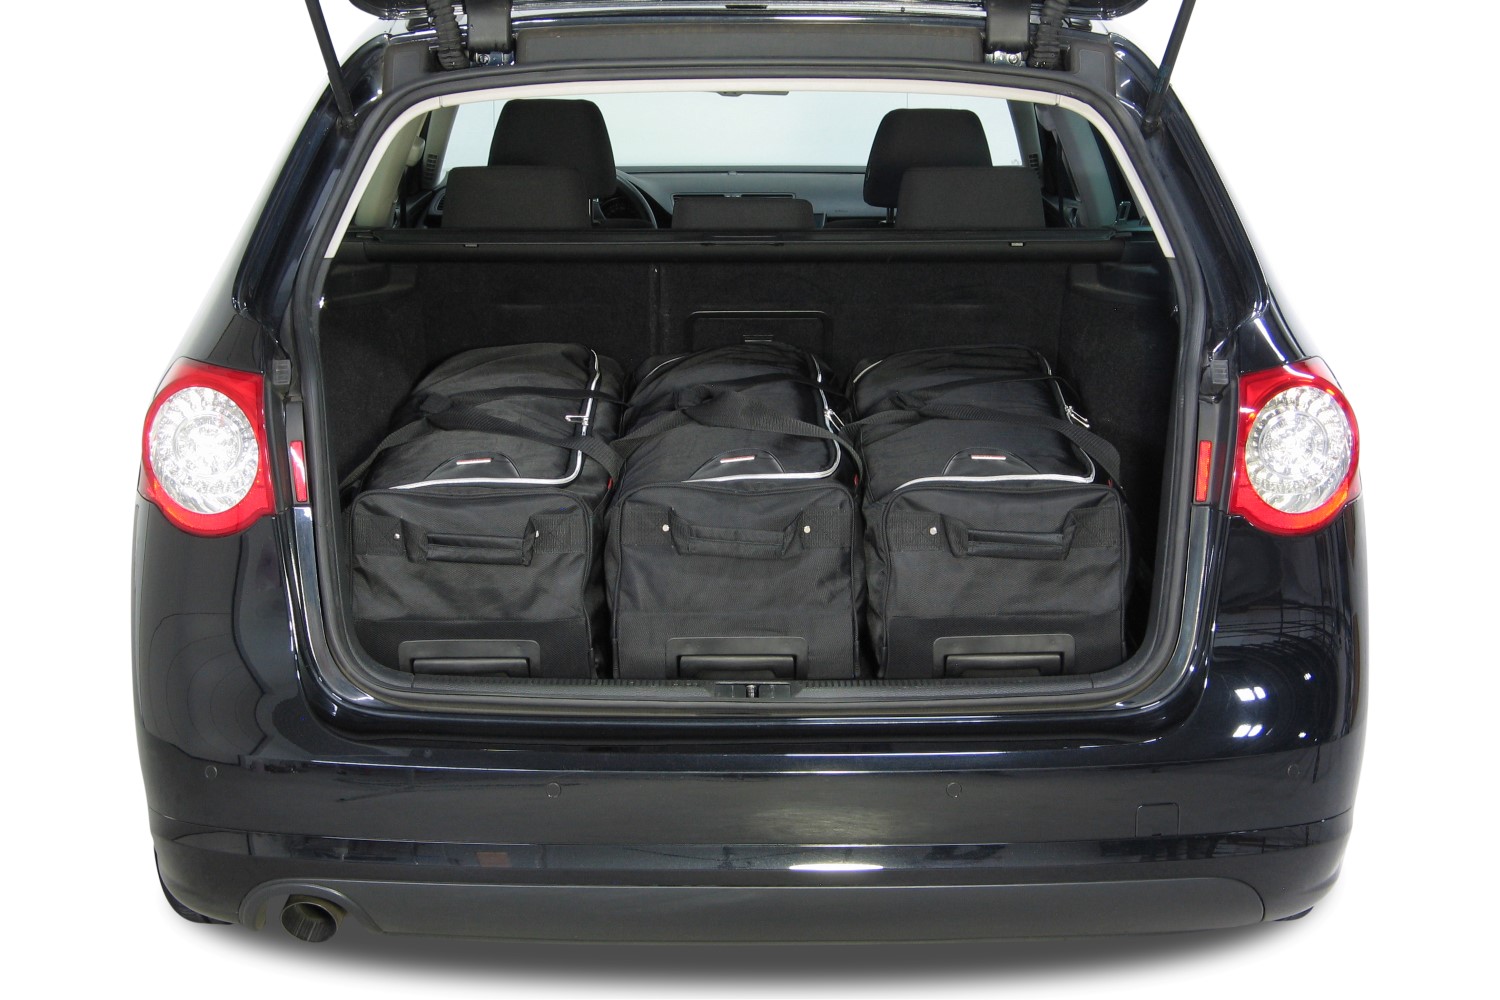 Фольксваген б6 багажнике пассат. Passat b6 variant багажник. Фольксваген Пассат б6 универсал багажник. Volkswagen Passat b6 универсал багажник. Passat b6 variant багажник разложен.